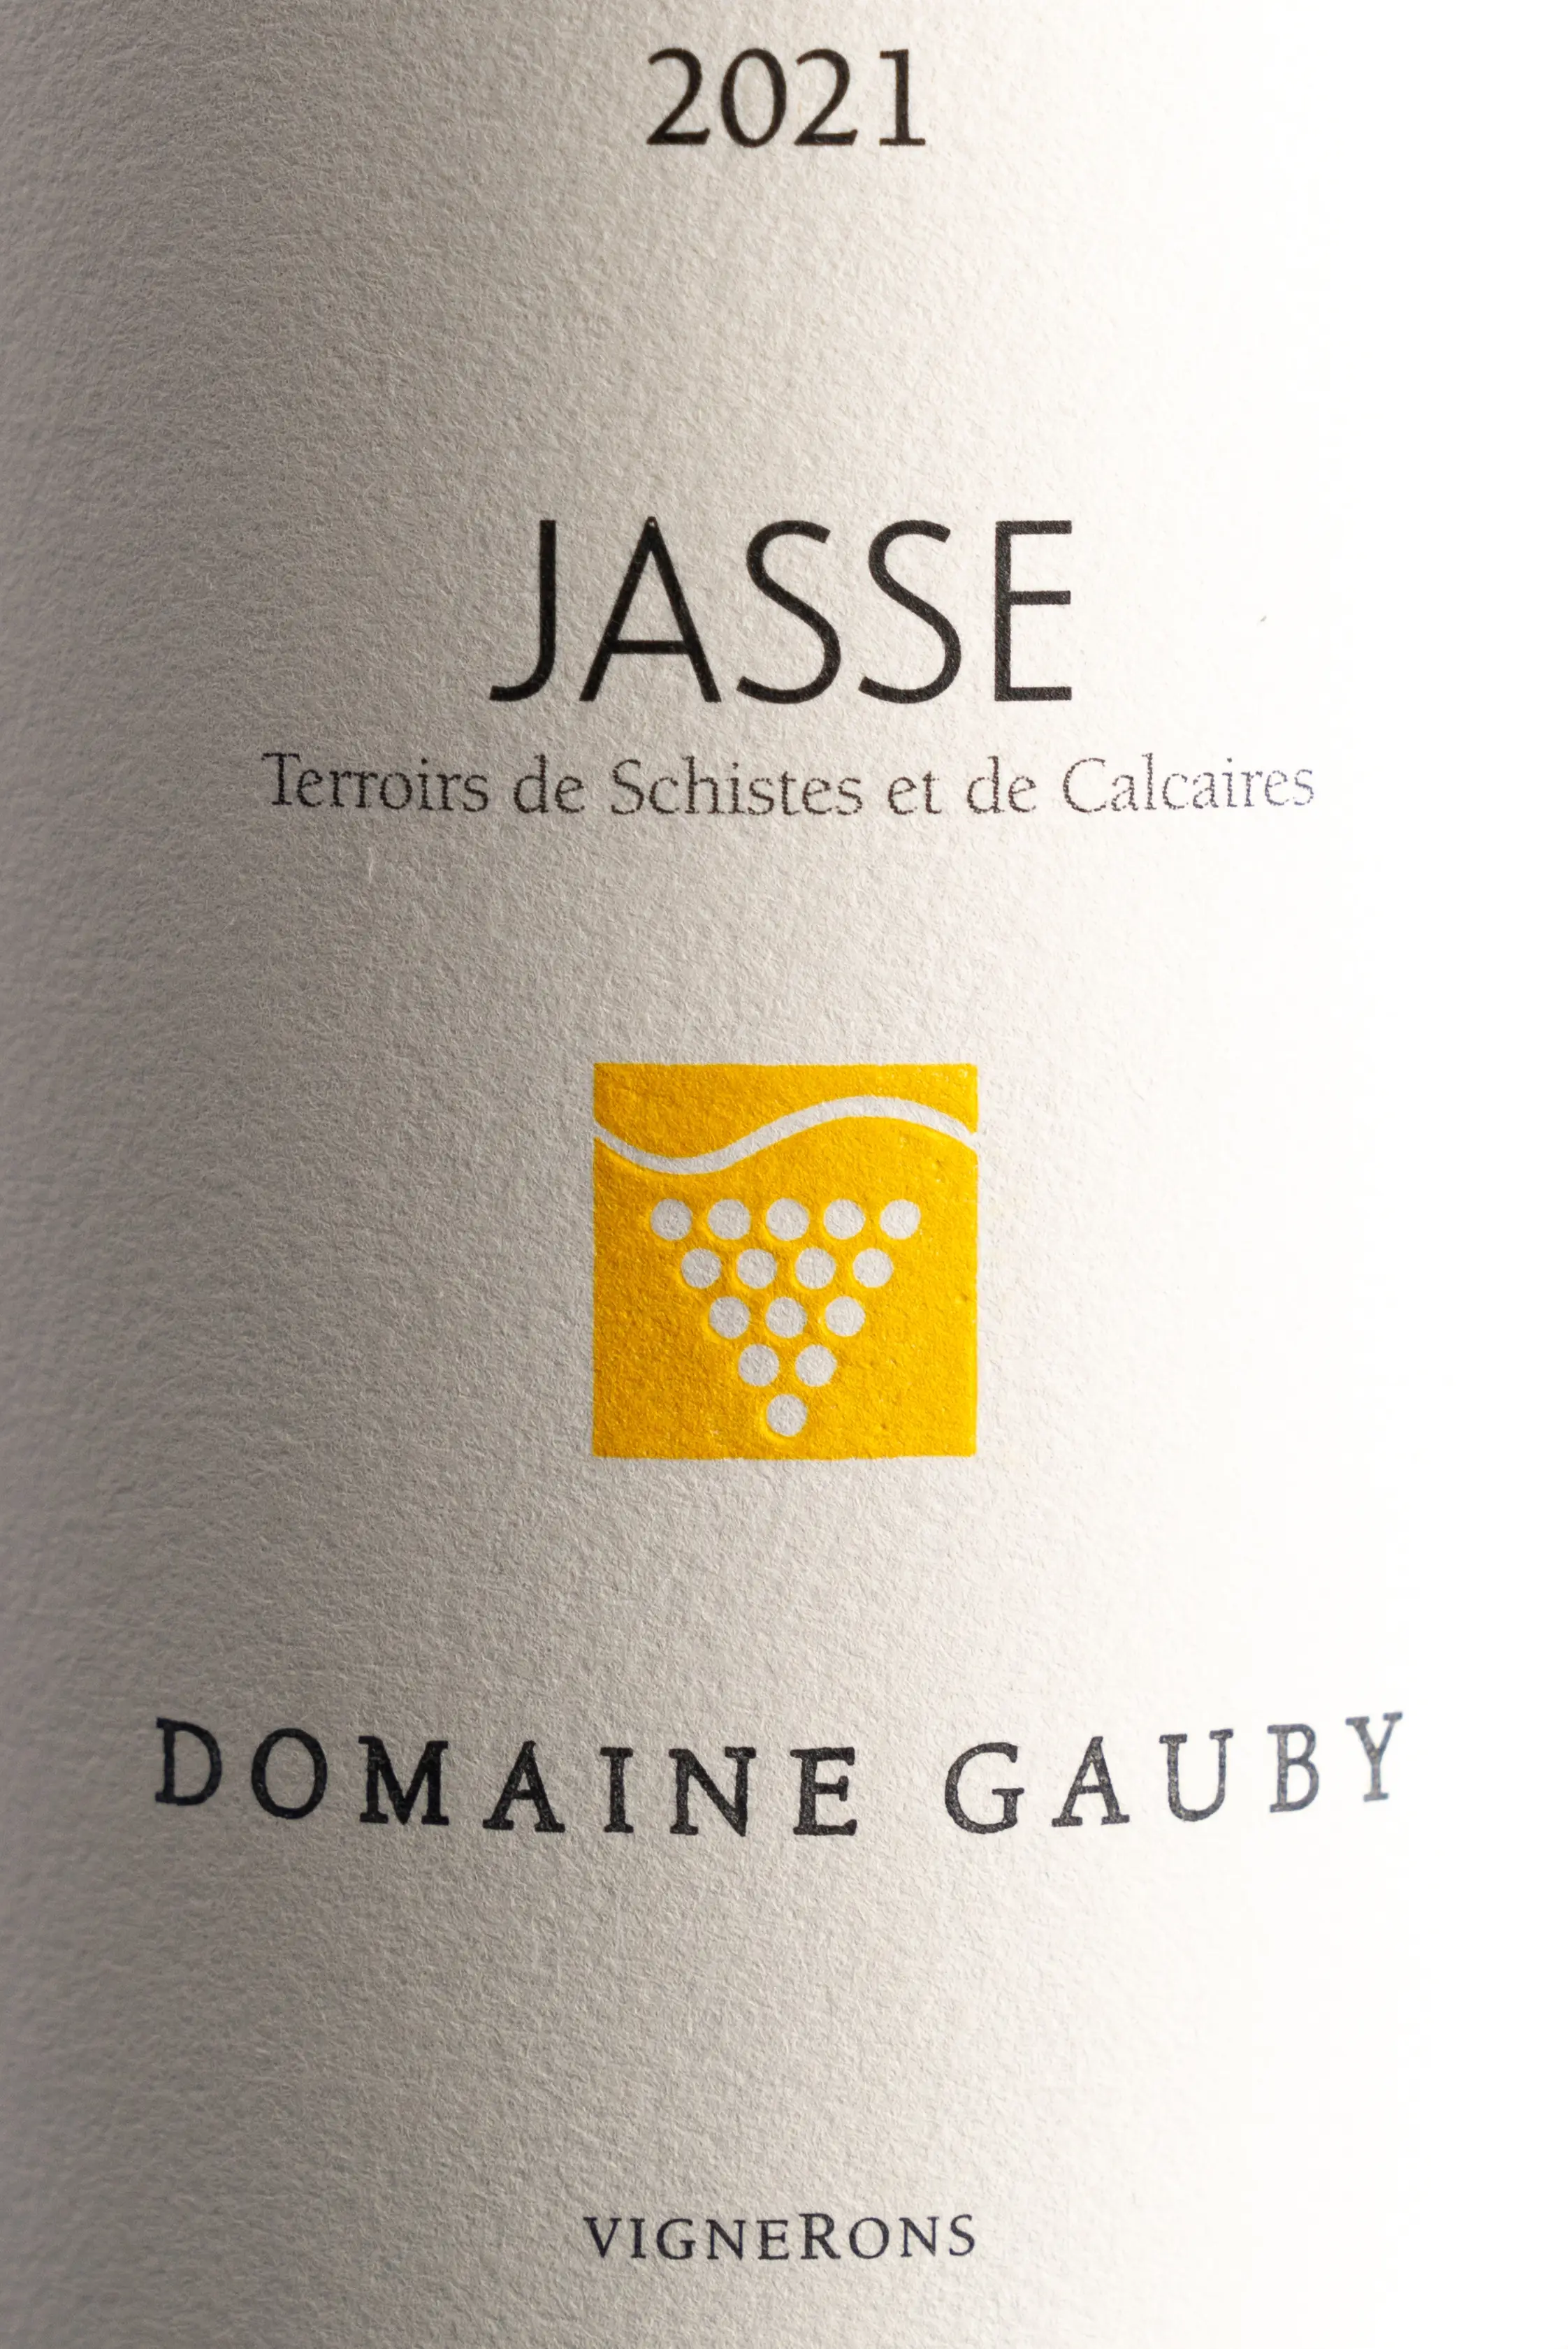 Вино Domaine Gauby Jasse Cotes Catalanes IGP 2021 / Домен Габи Жасс 2021